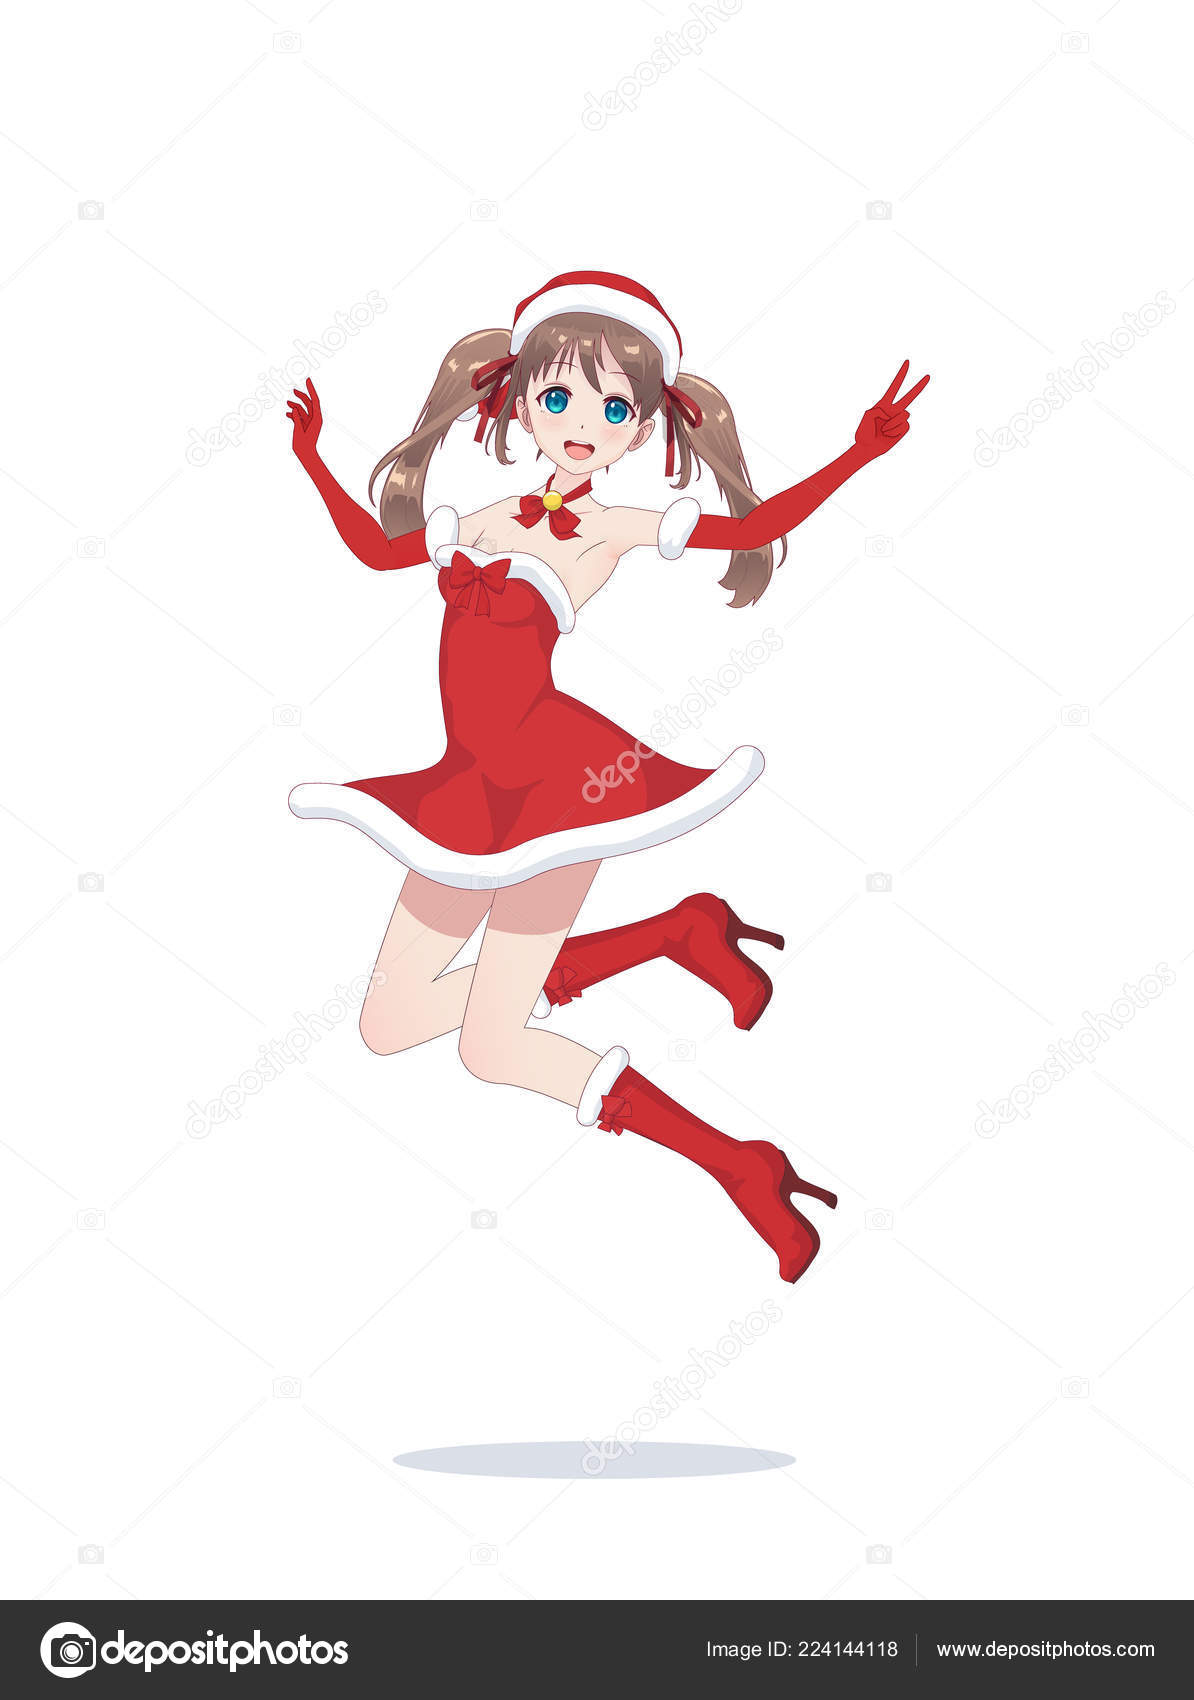 Joyful Anime Manga Girl As Santa Claus In A Jump Stock